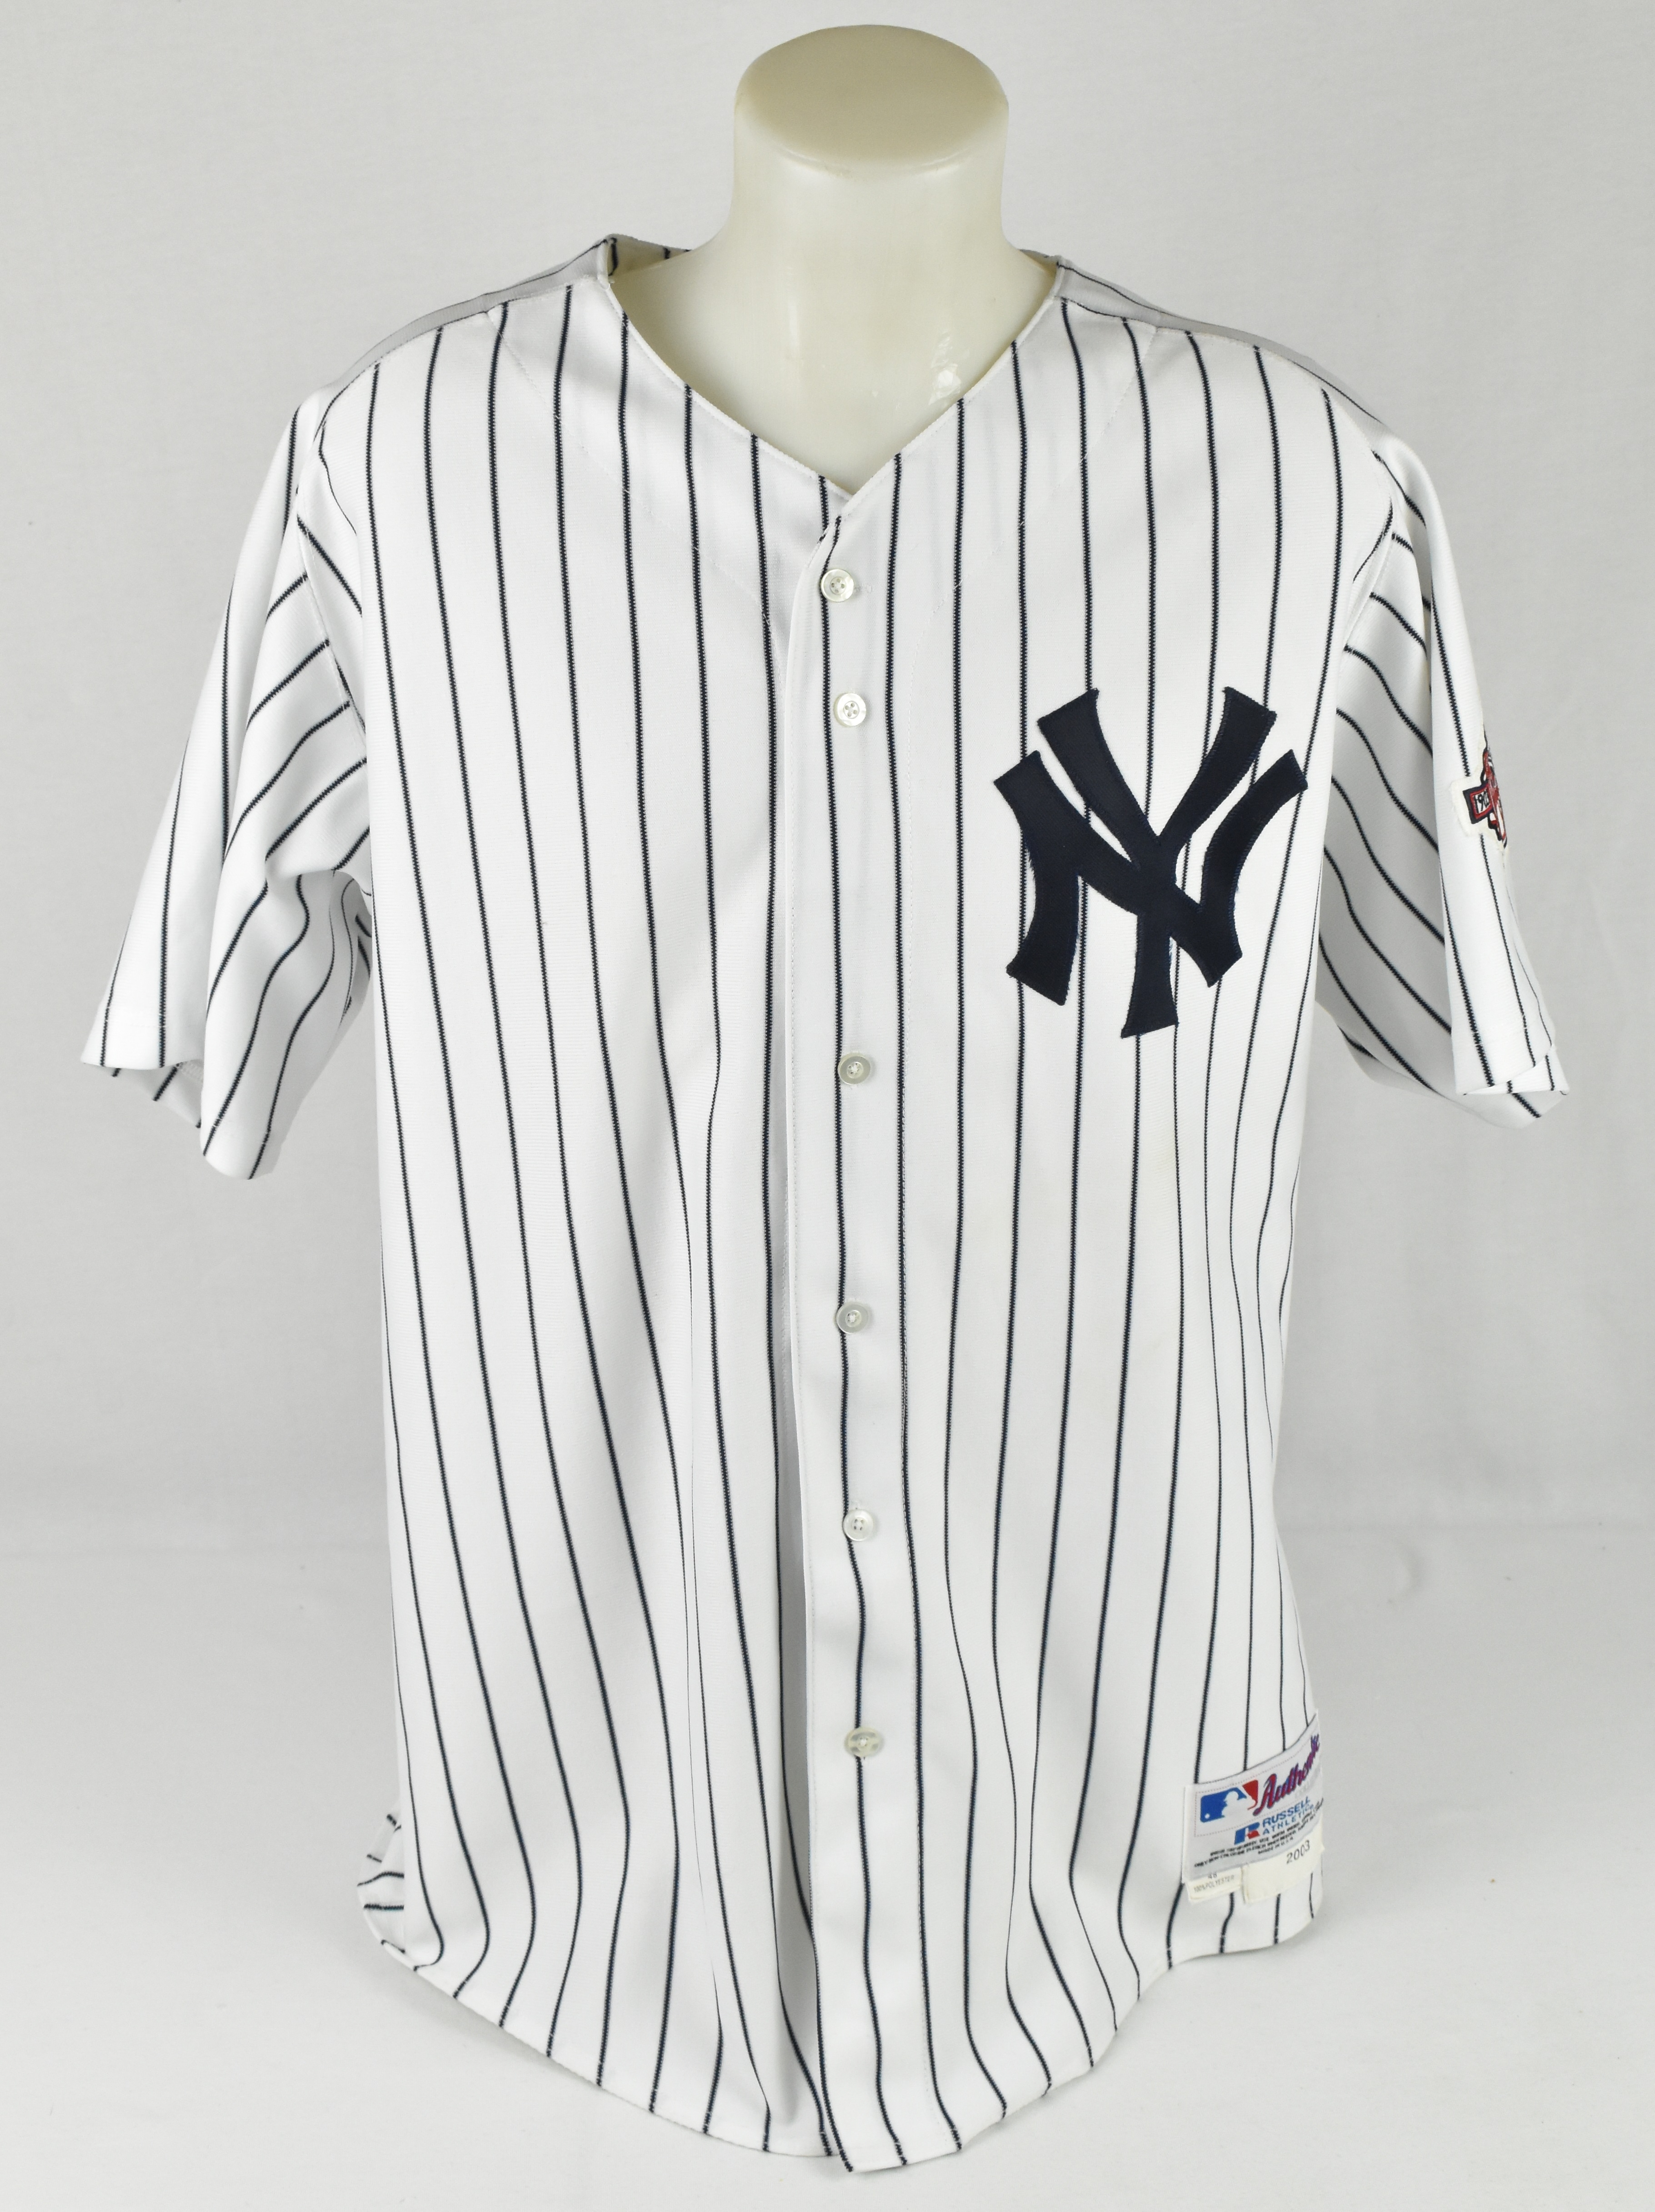 Lot Detail - Derek Jeter 2003 New York Yankees Game Used 100th